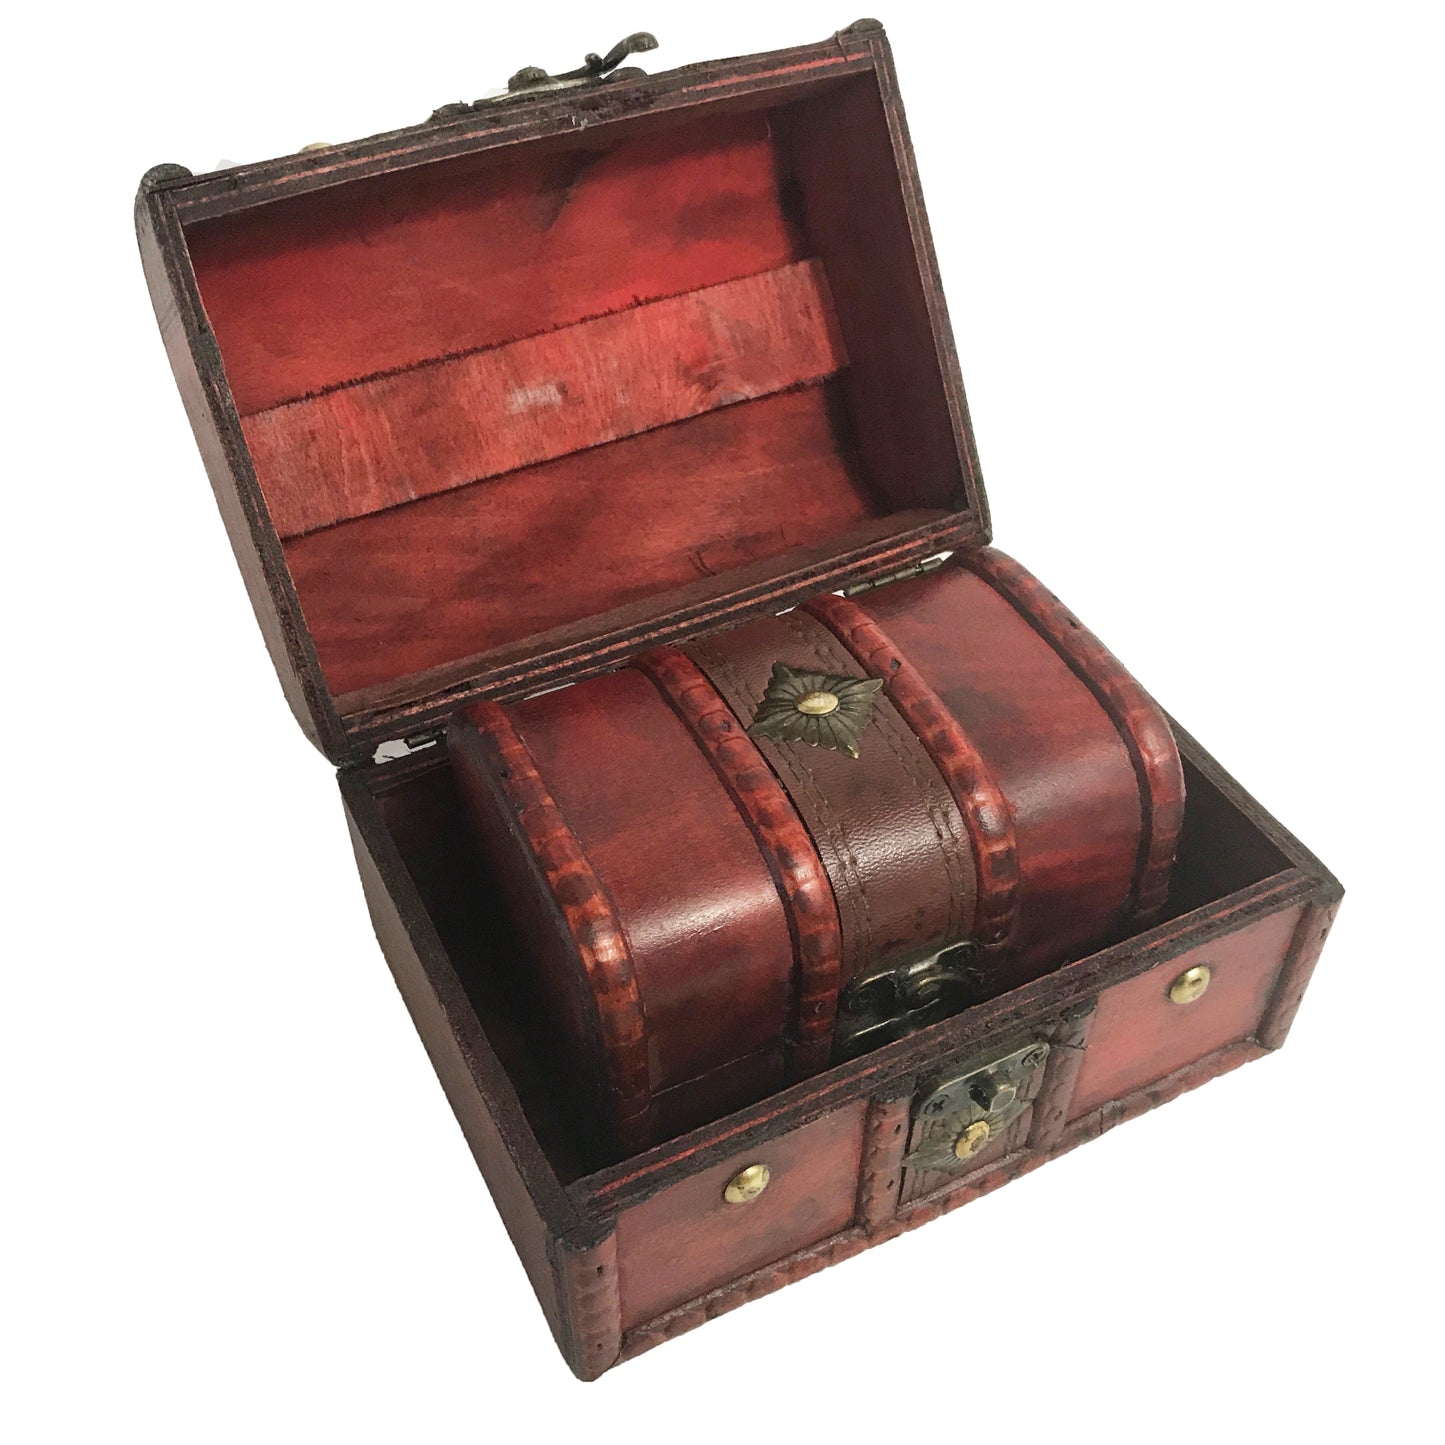 Allgala Wooden Box Antique Wooden Jewelry Treasure Trinket Keepsake Box 2-PC Set